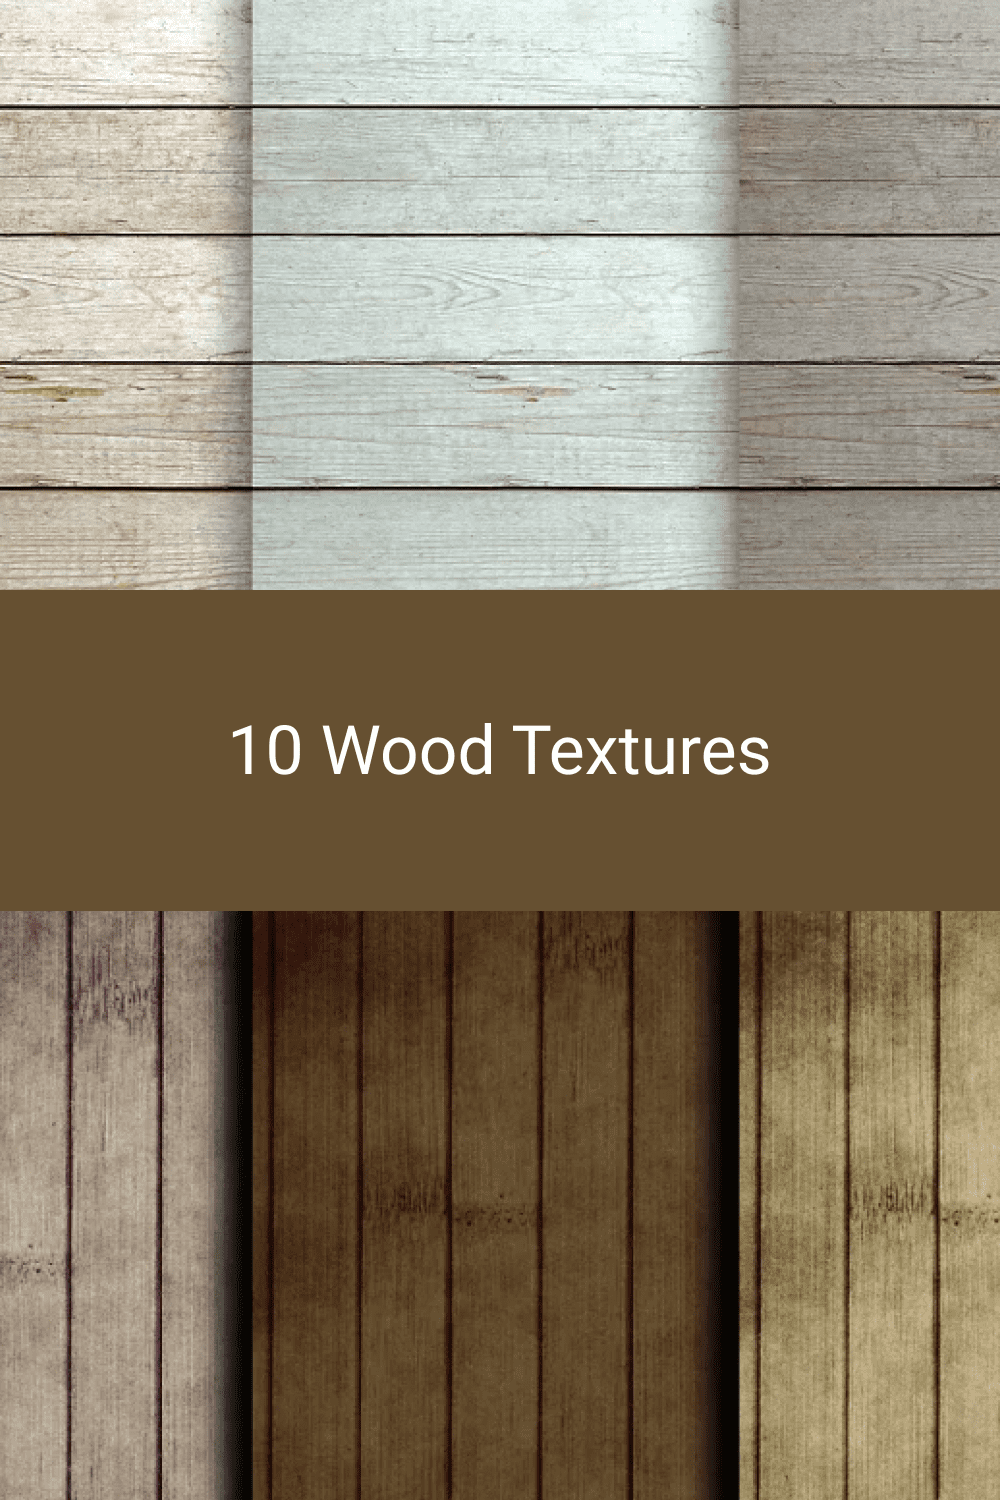 04 10 wood textures 1000h1500